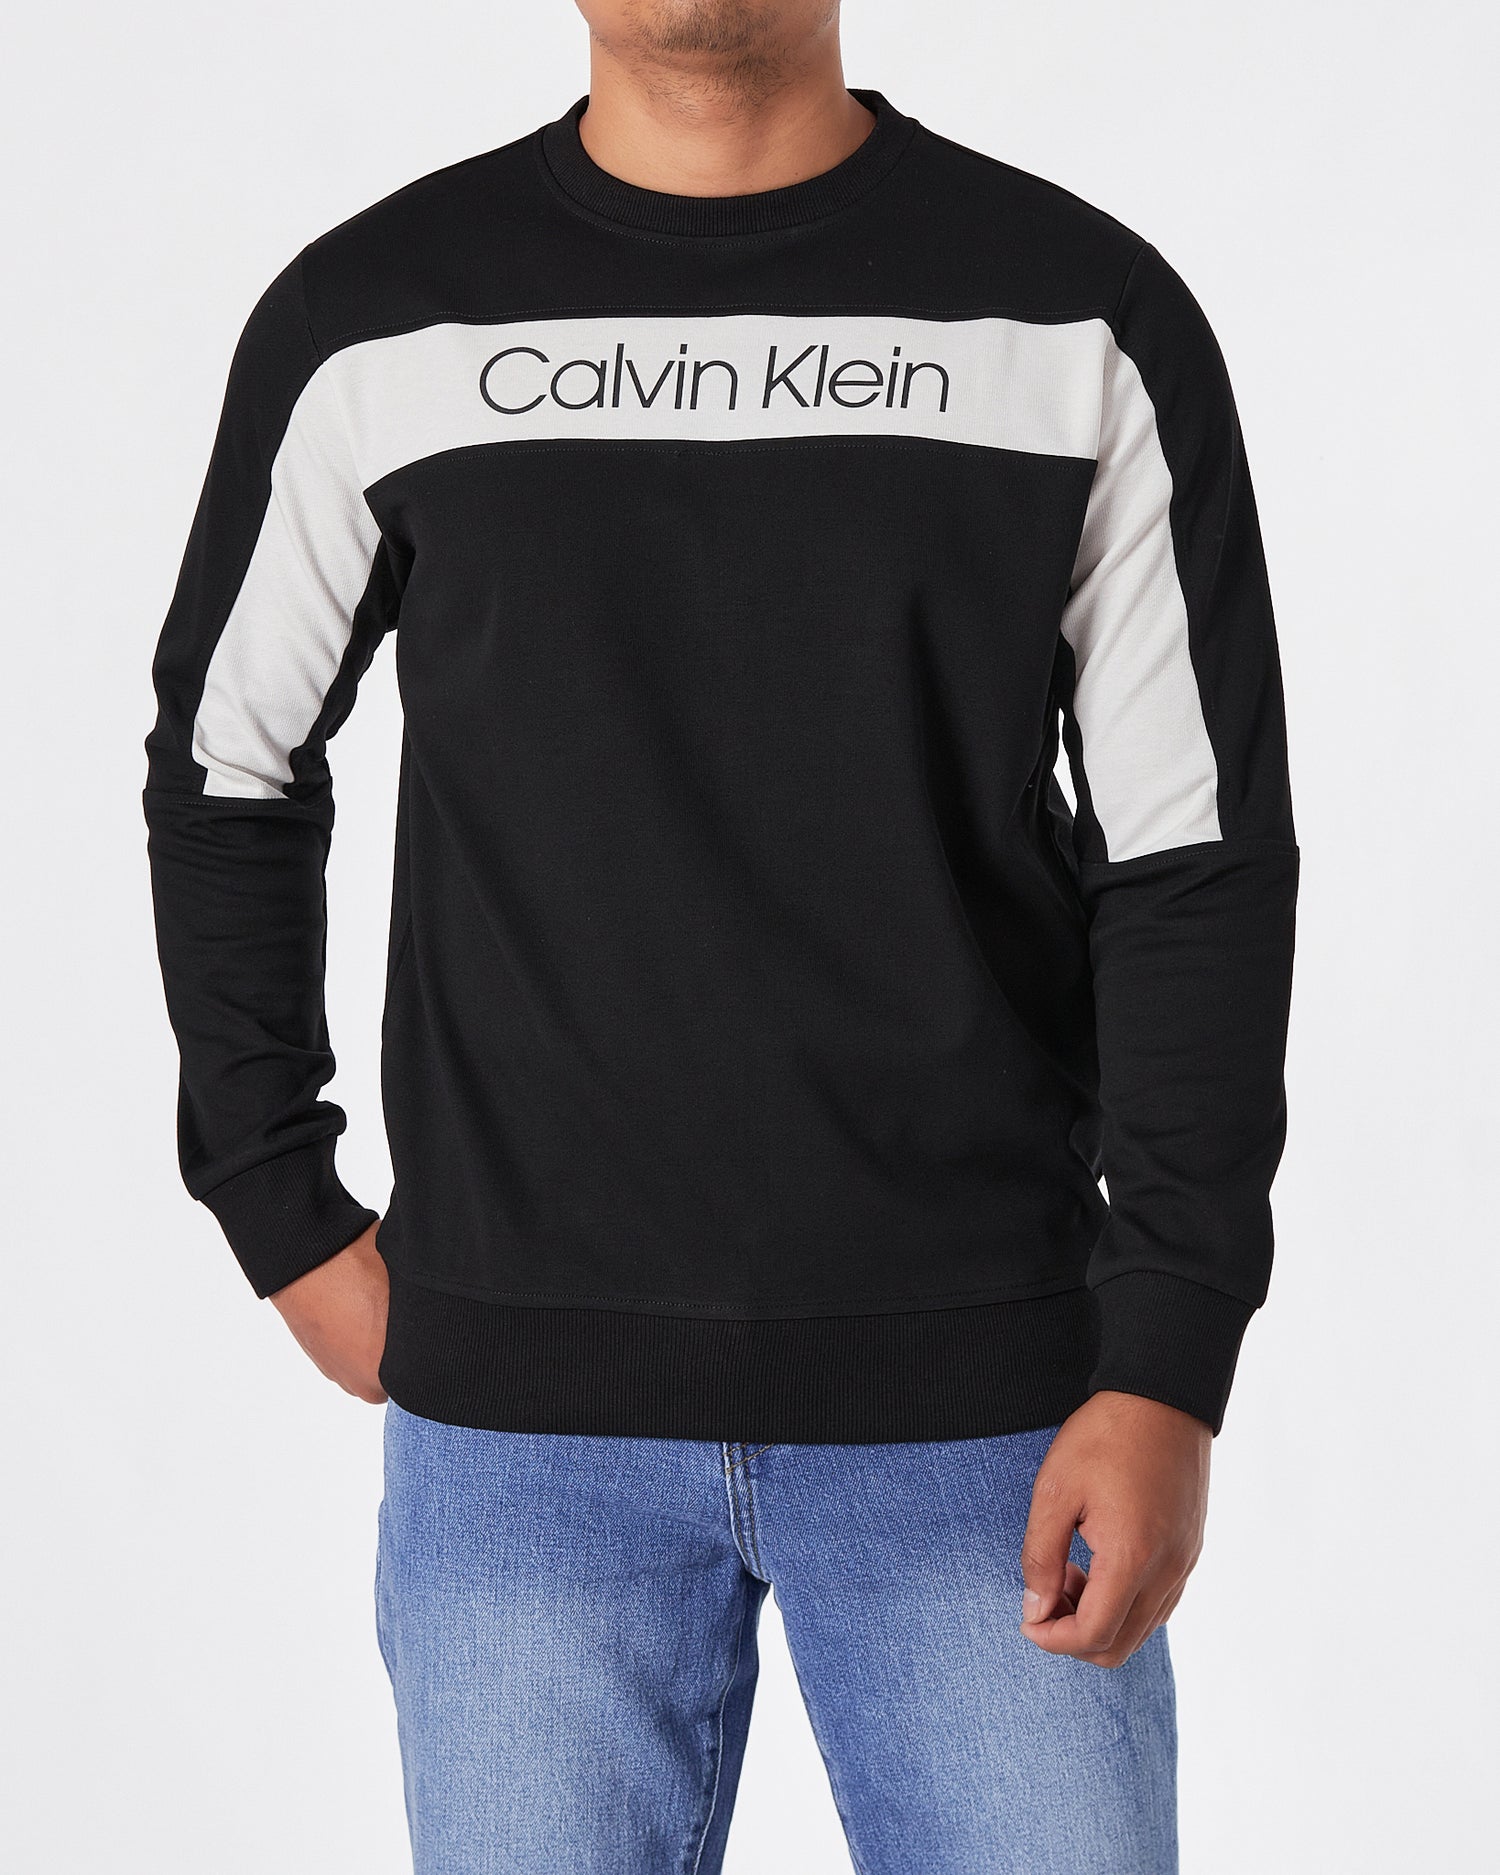 CK Color Block Men Black Sweater 25.90